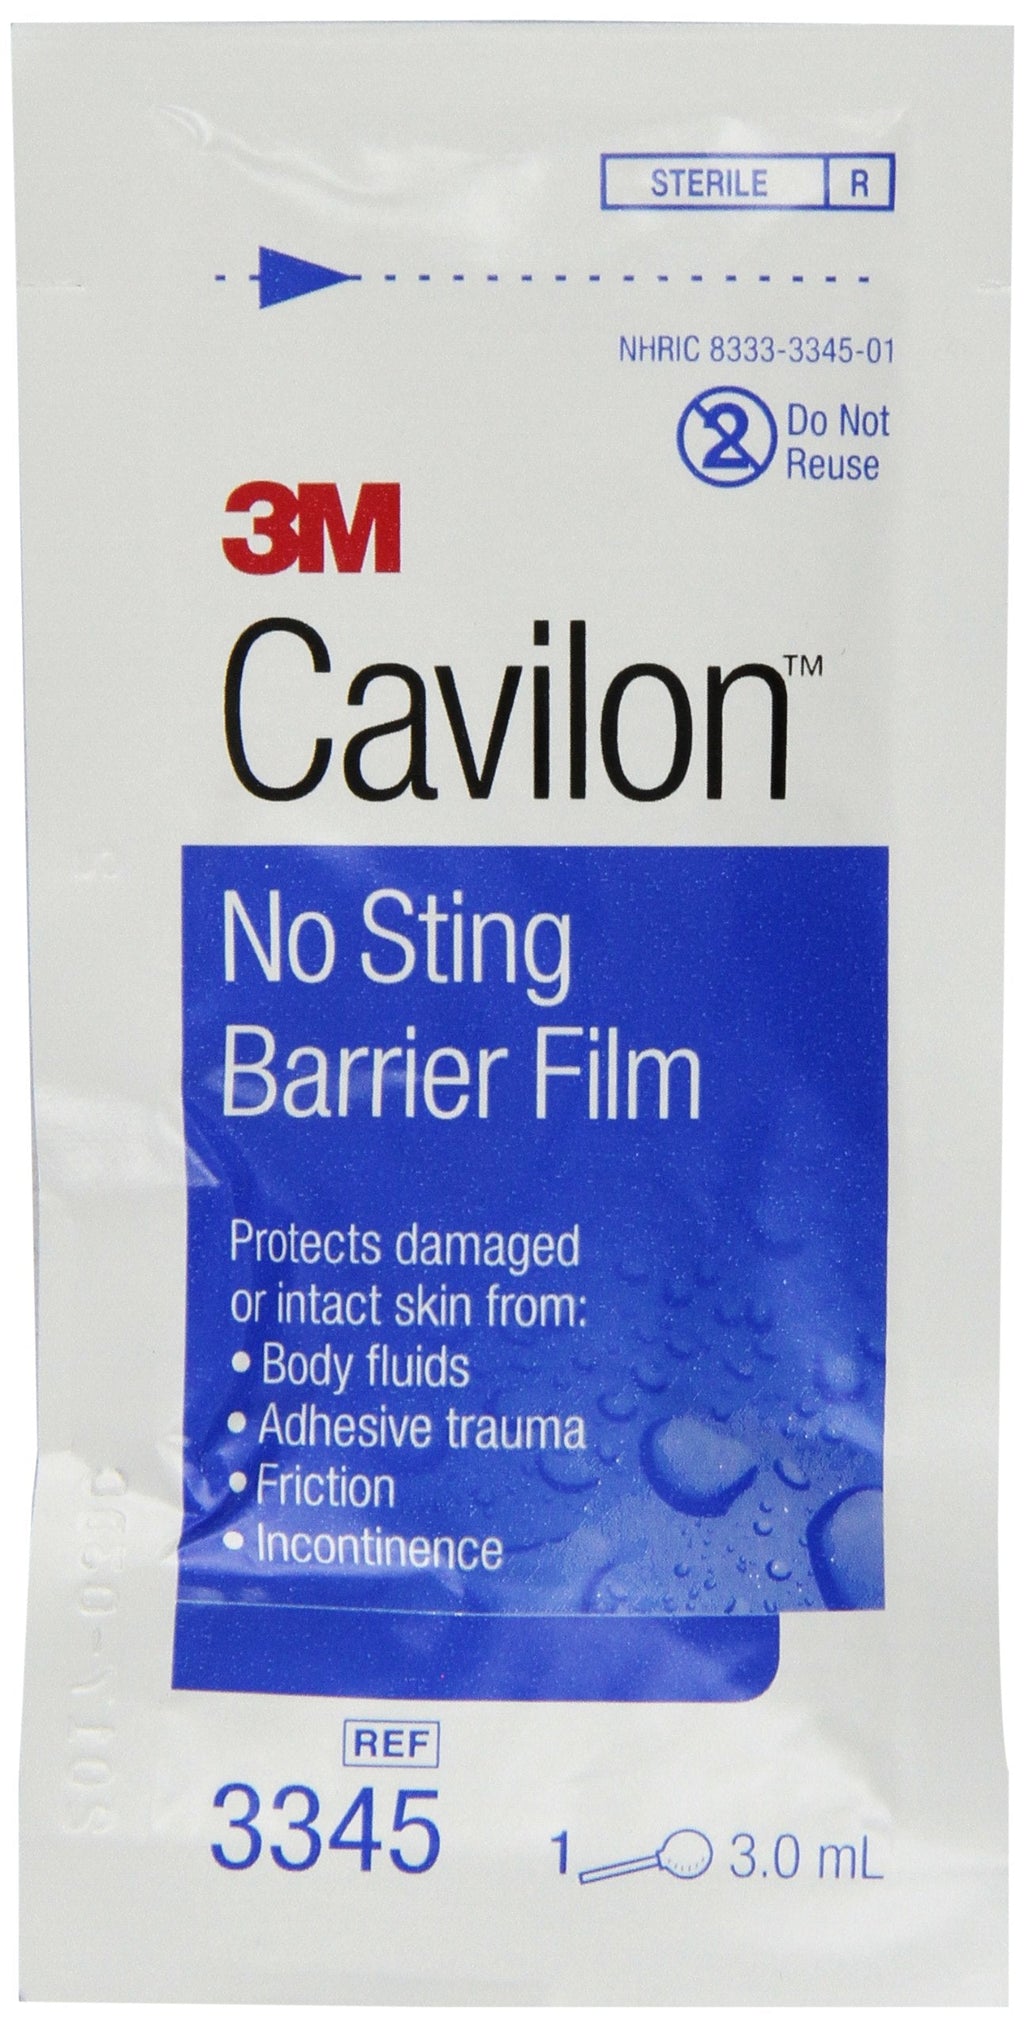 [Australia] - 3M Cavilon No Sting Barrier Film 3345, 25 Applicators 